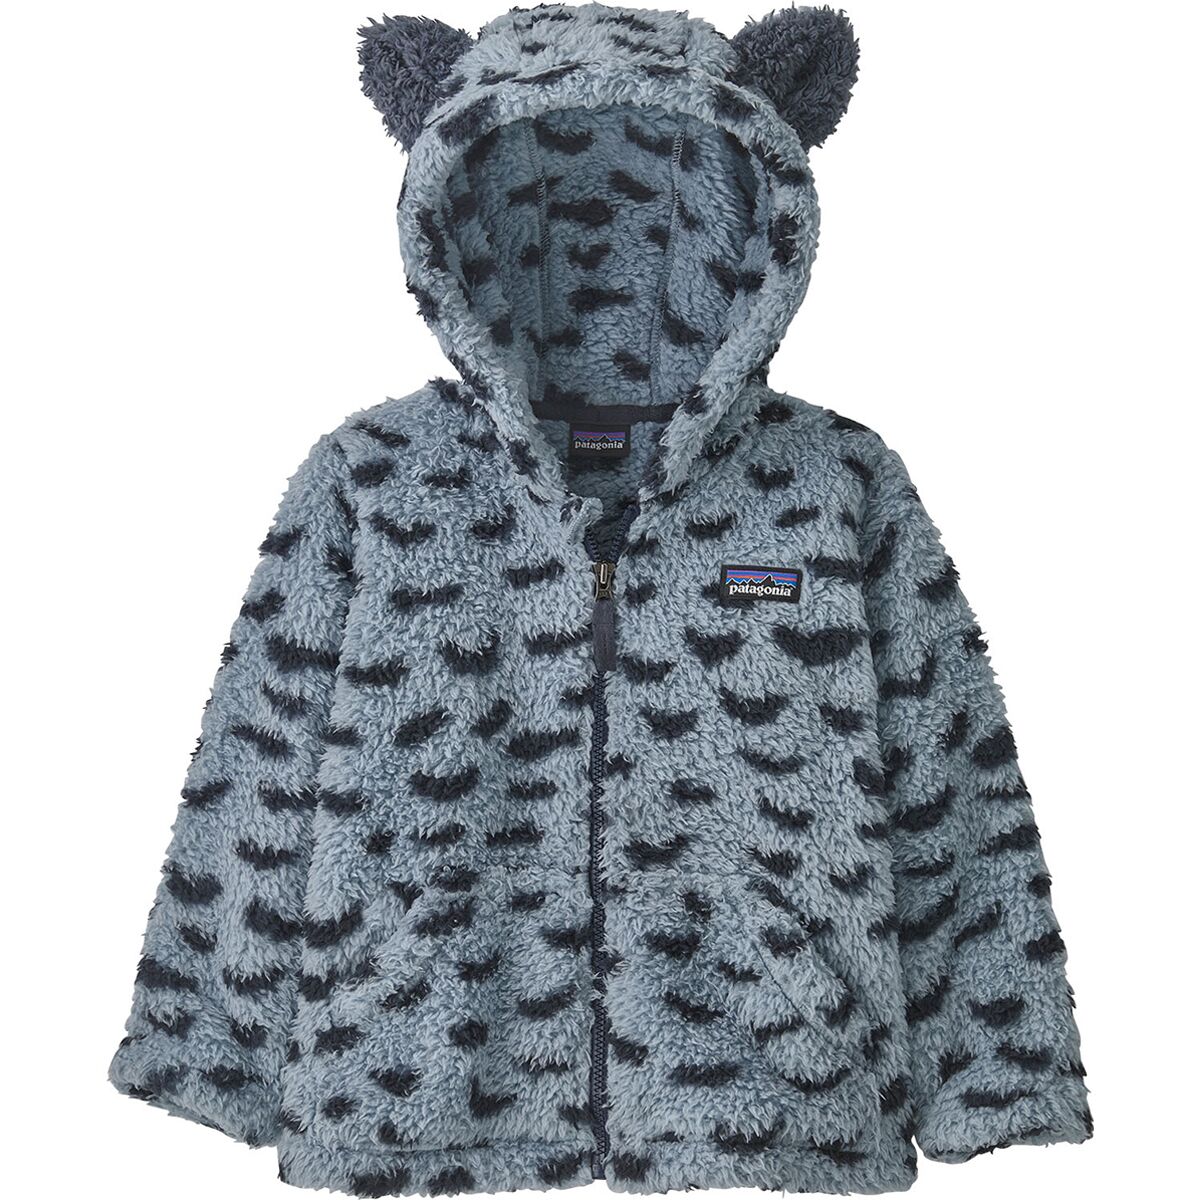 Patagonia Furry Friends Fleece Hooded Jacket - Toddlers'